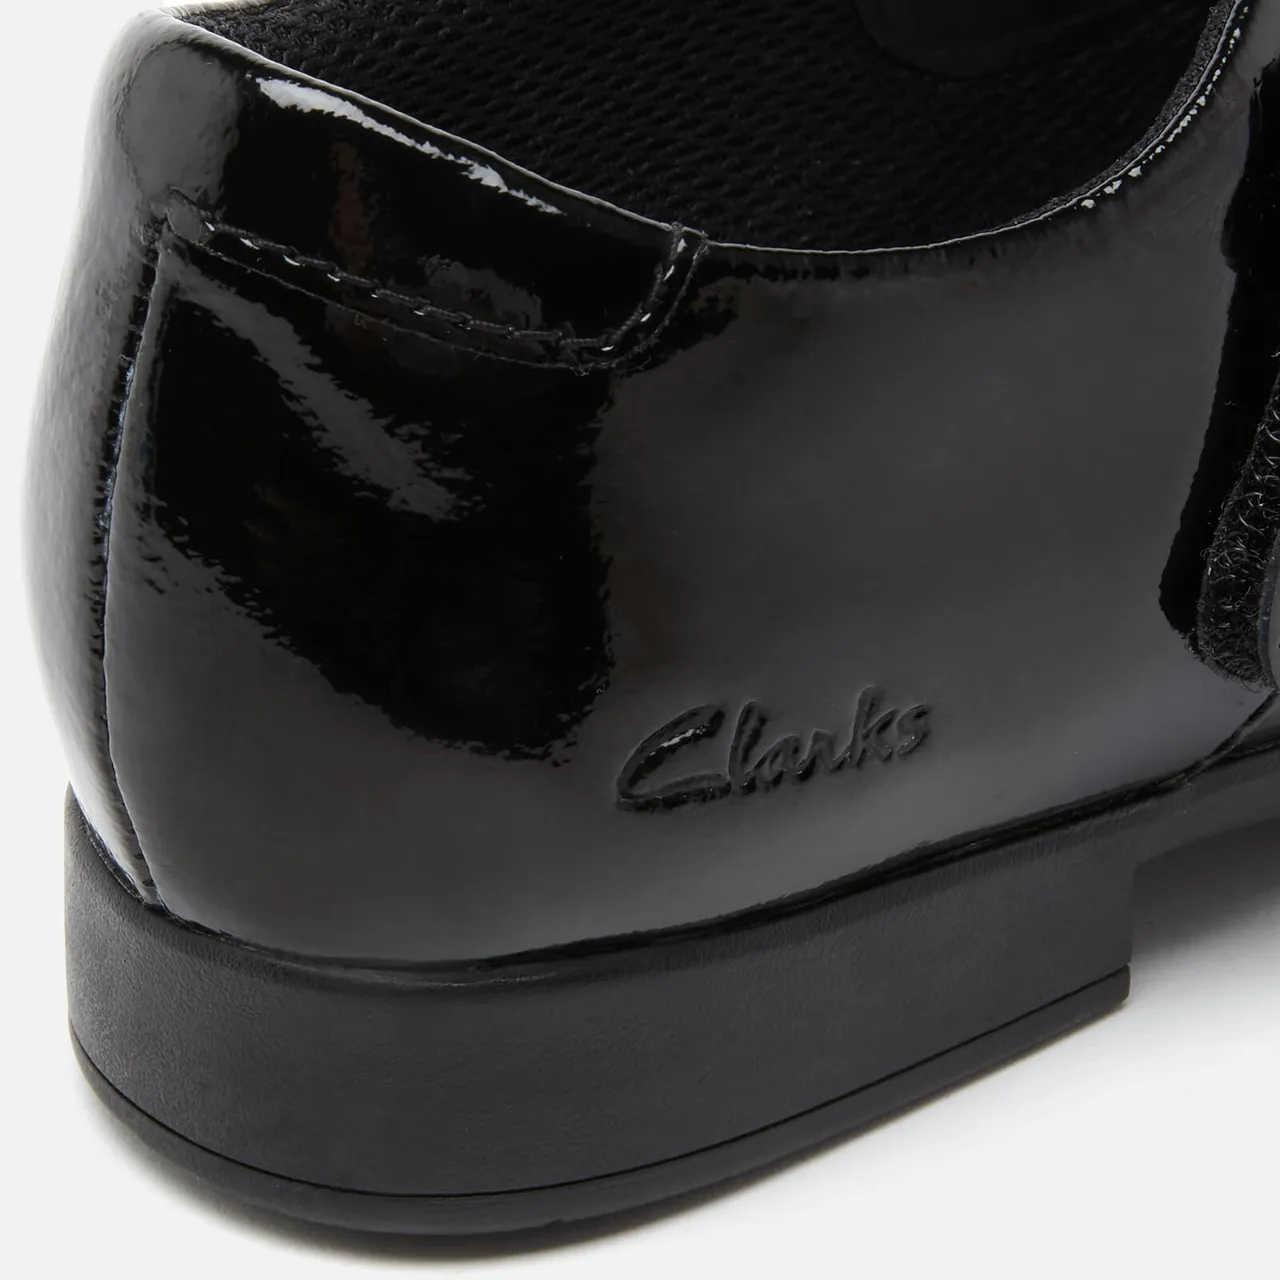 Clarks Kids' Scala Spirit School Shoes - Black Pat